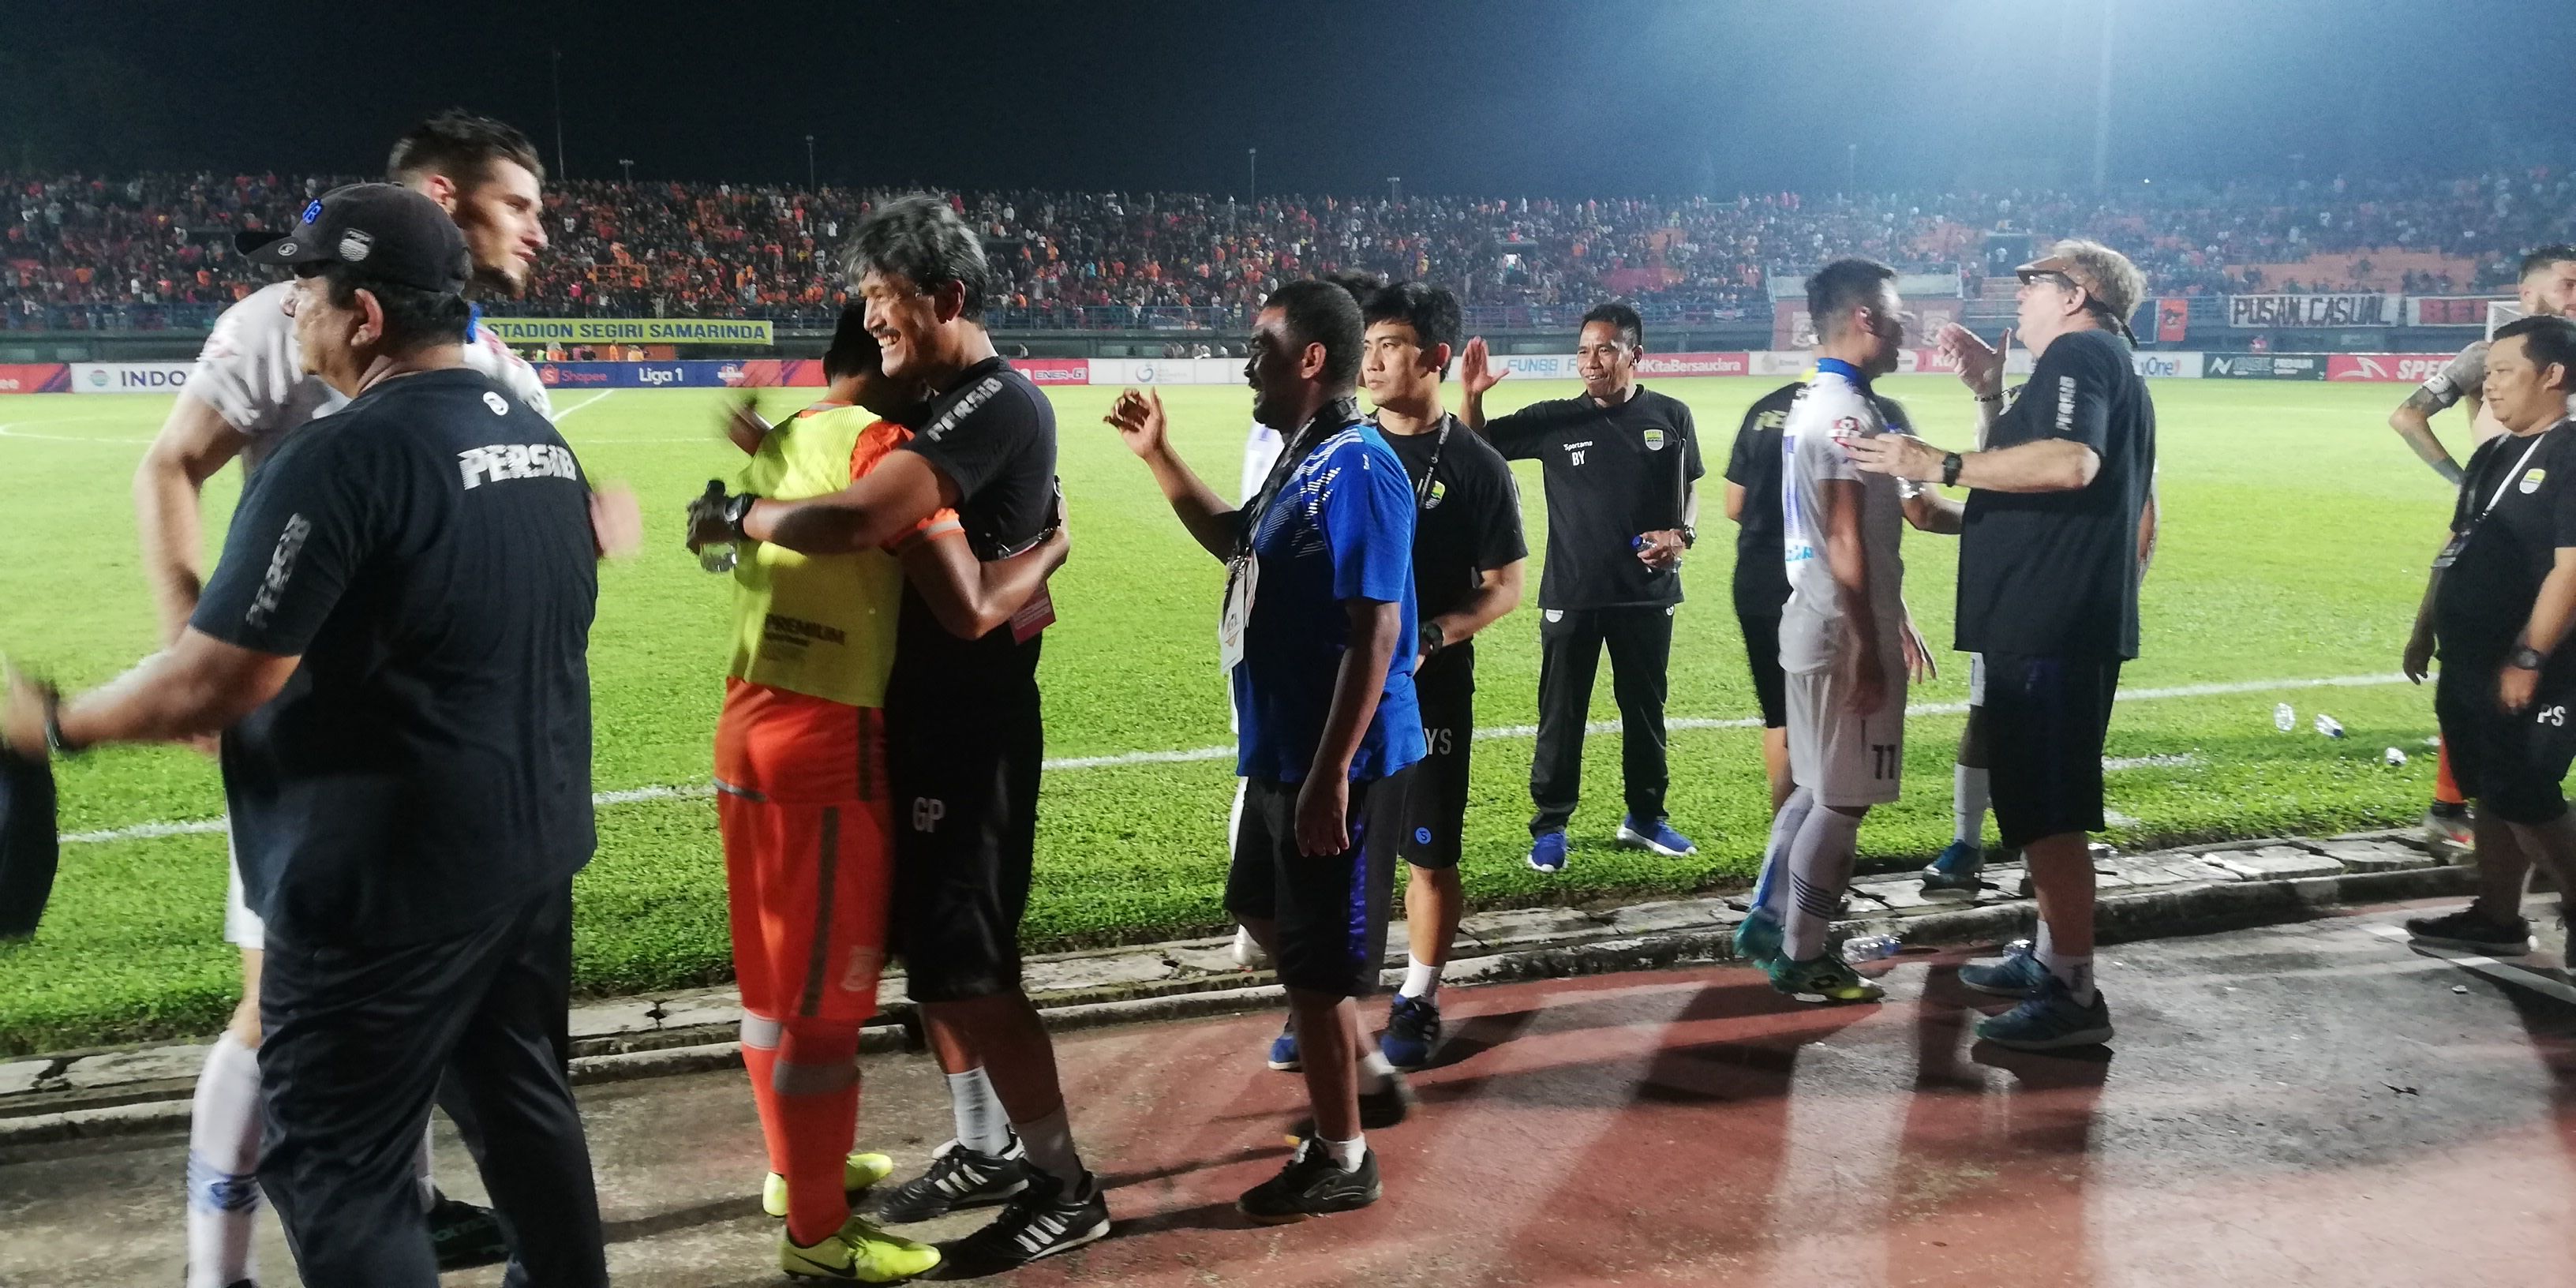 PARA pemain Persib Bandungmerayakan kemenangan usai bertanding melawan Borneo FC pada ajang Shopee Liga 1 di Stadion Segiri, Samarinda, Kalimantan Timur, Rabu 11 Desember 2019.*